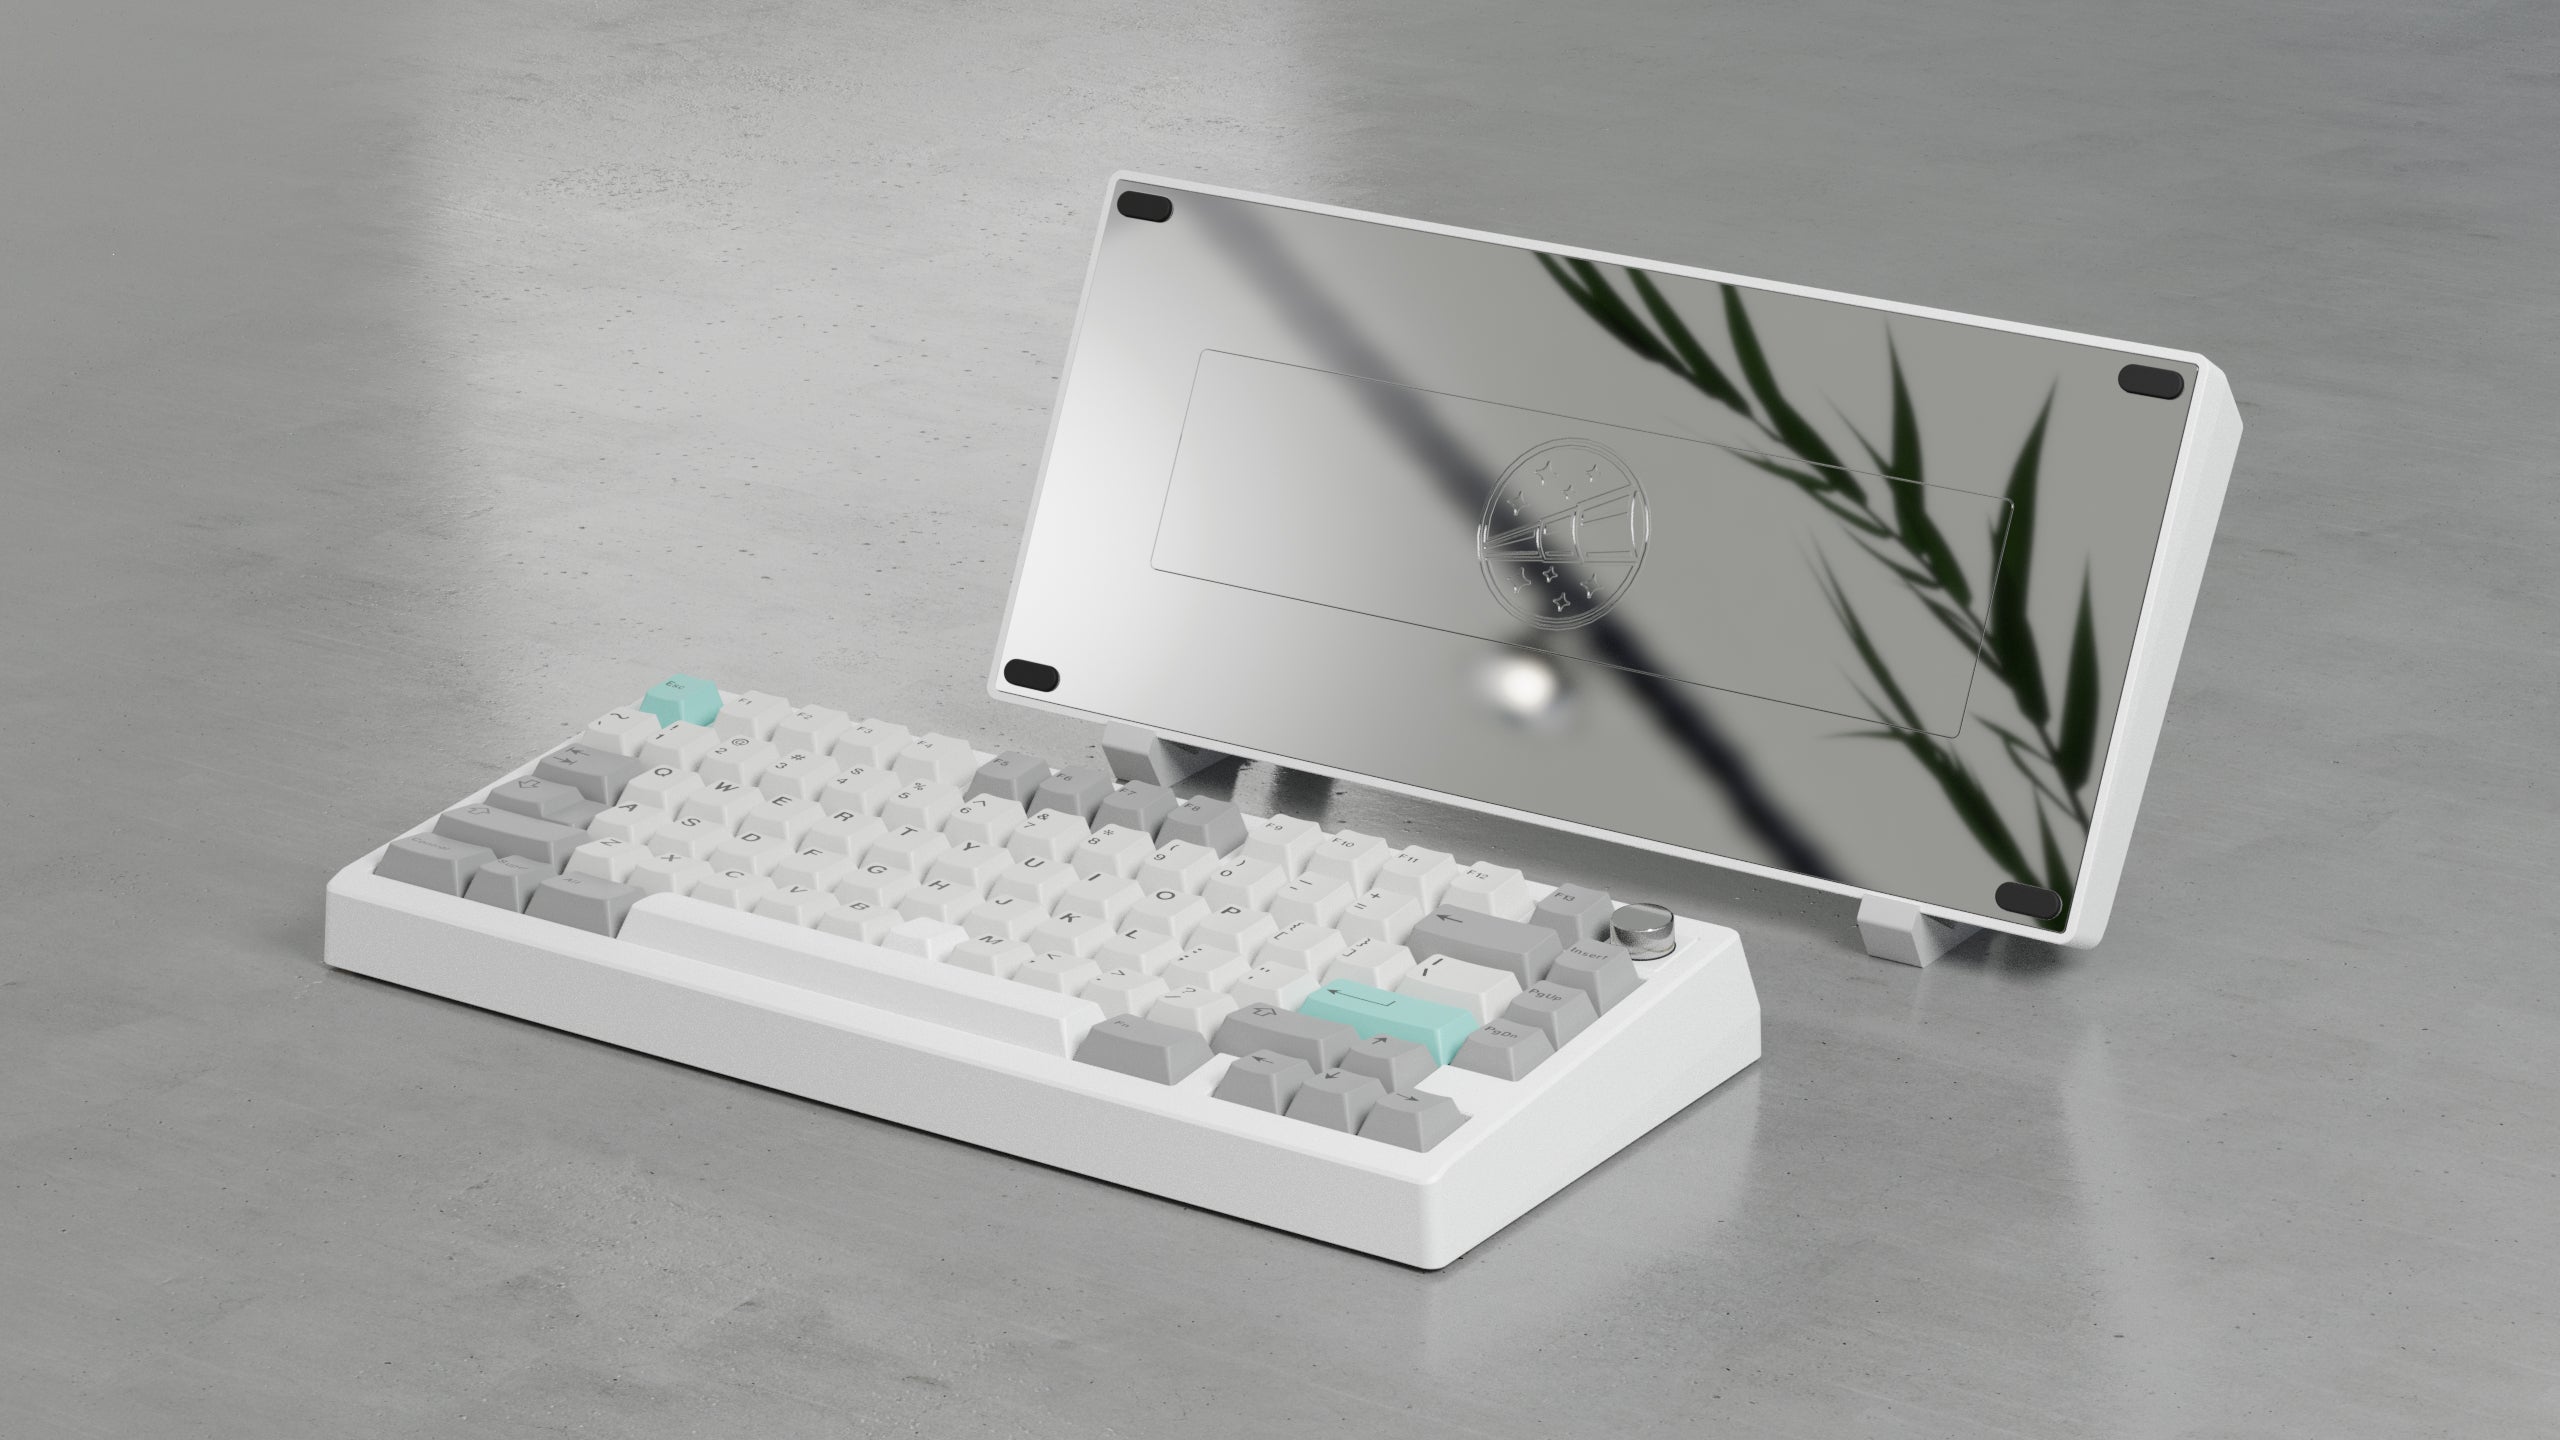 Zoom75 EE Keyboard - White [Preorder]